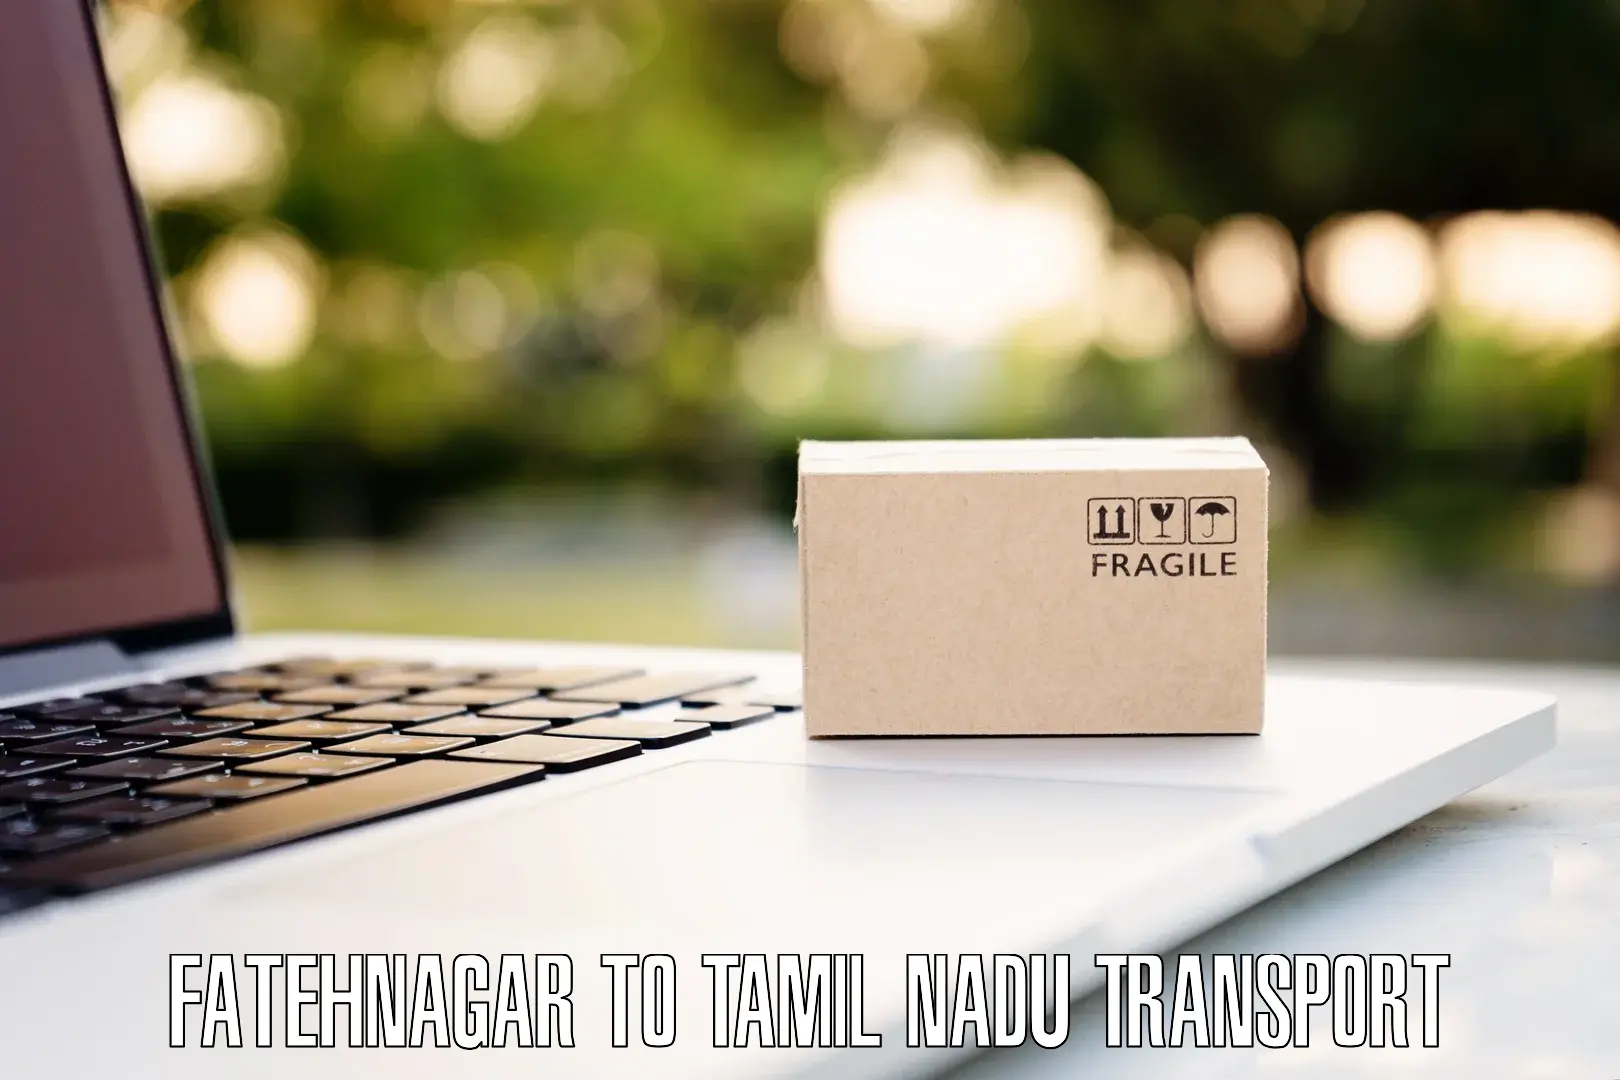 Two wheeler parcel service Fatehnagar to Tamil Nadu